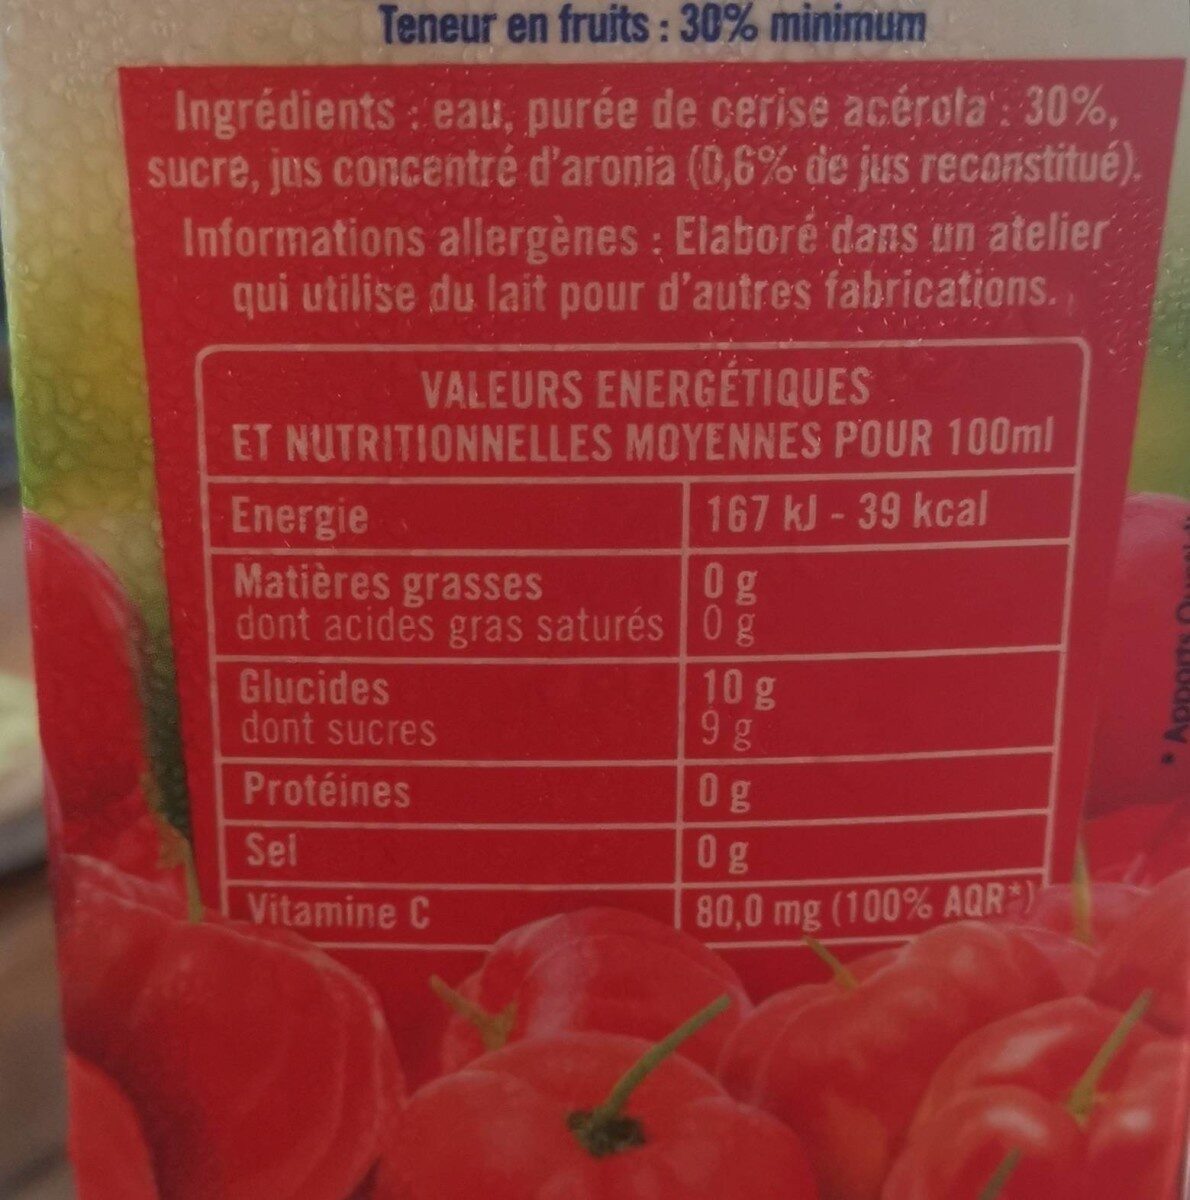 Nectar de cerise acerola - Nutrition facts - fr